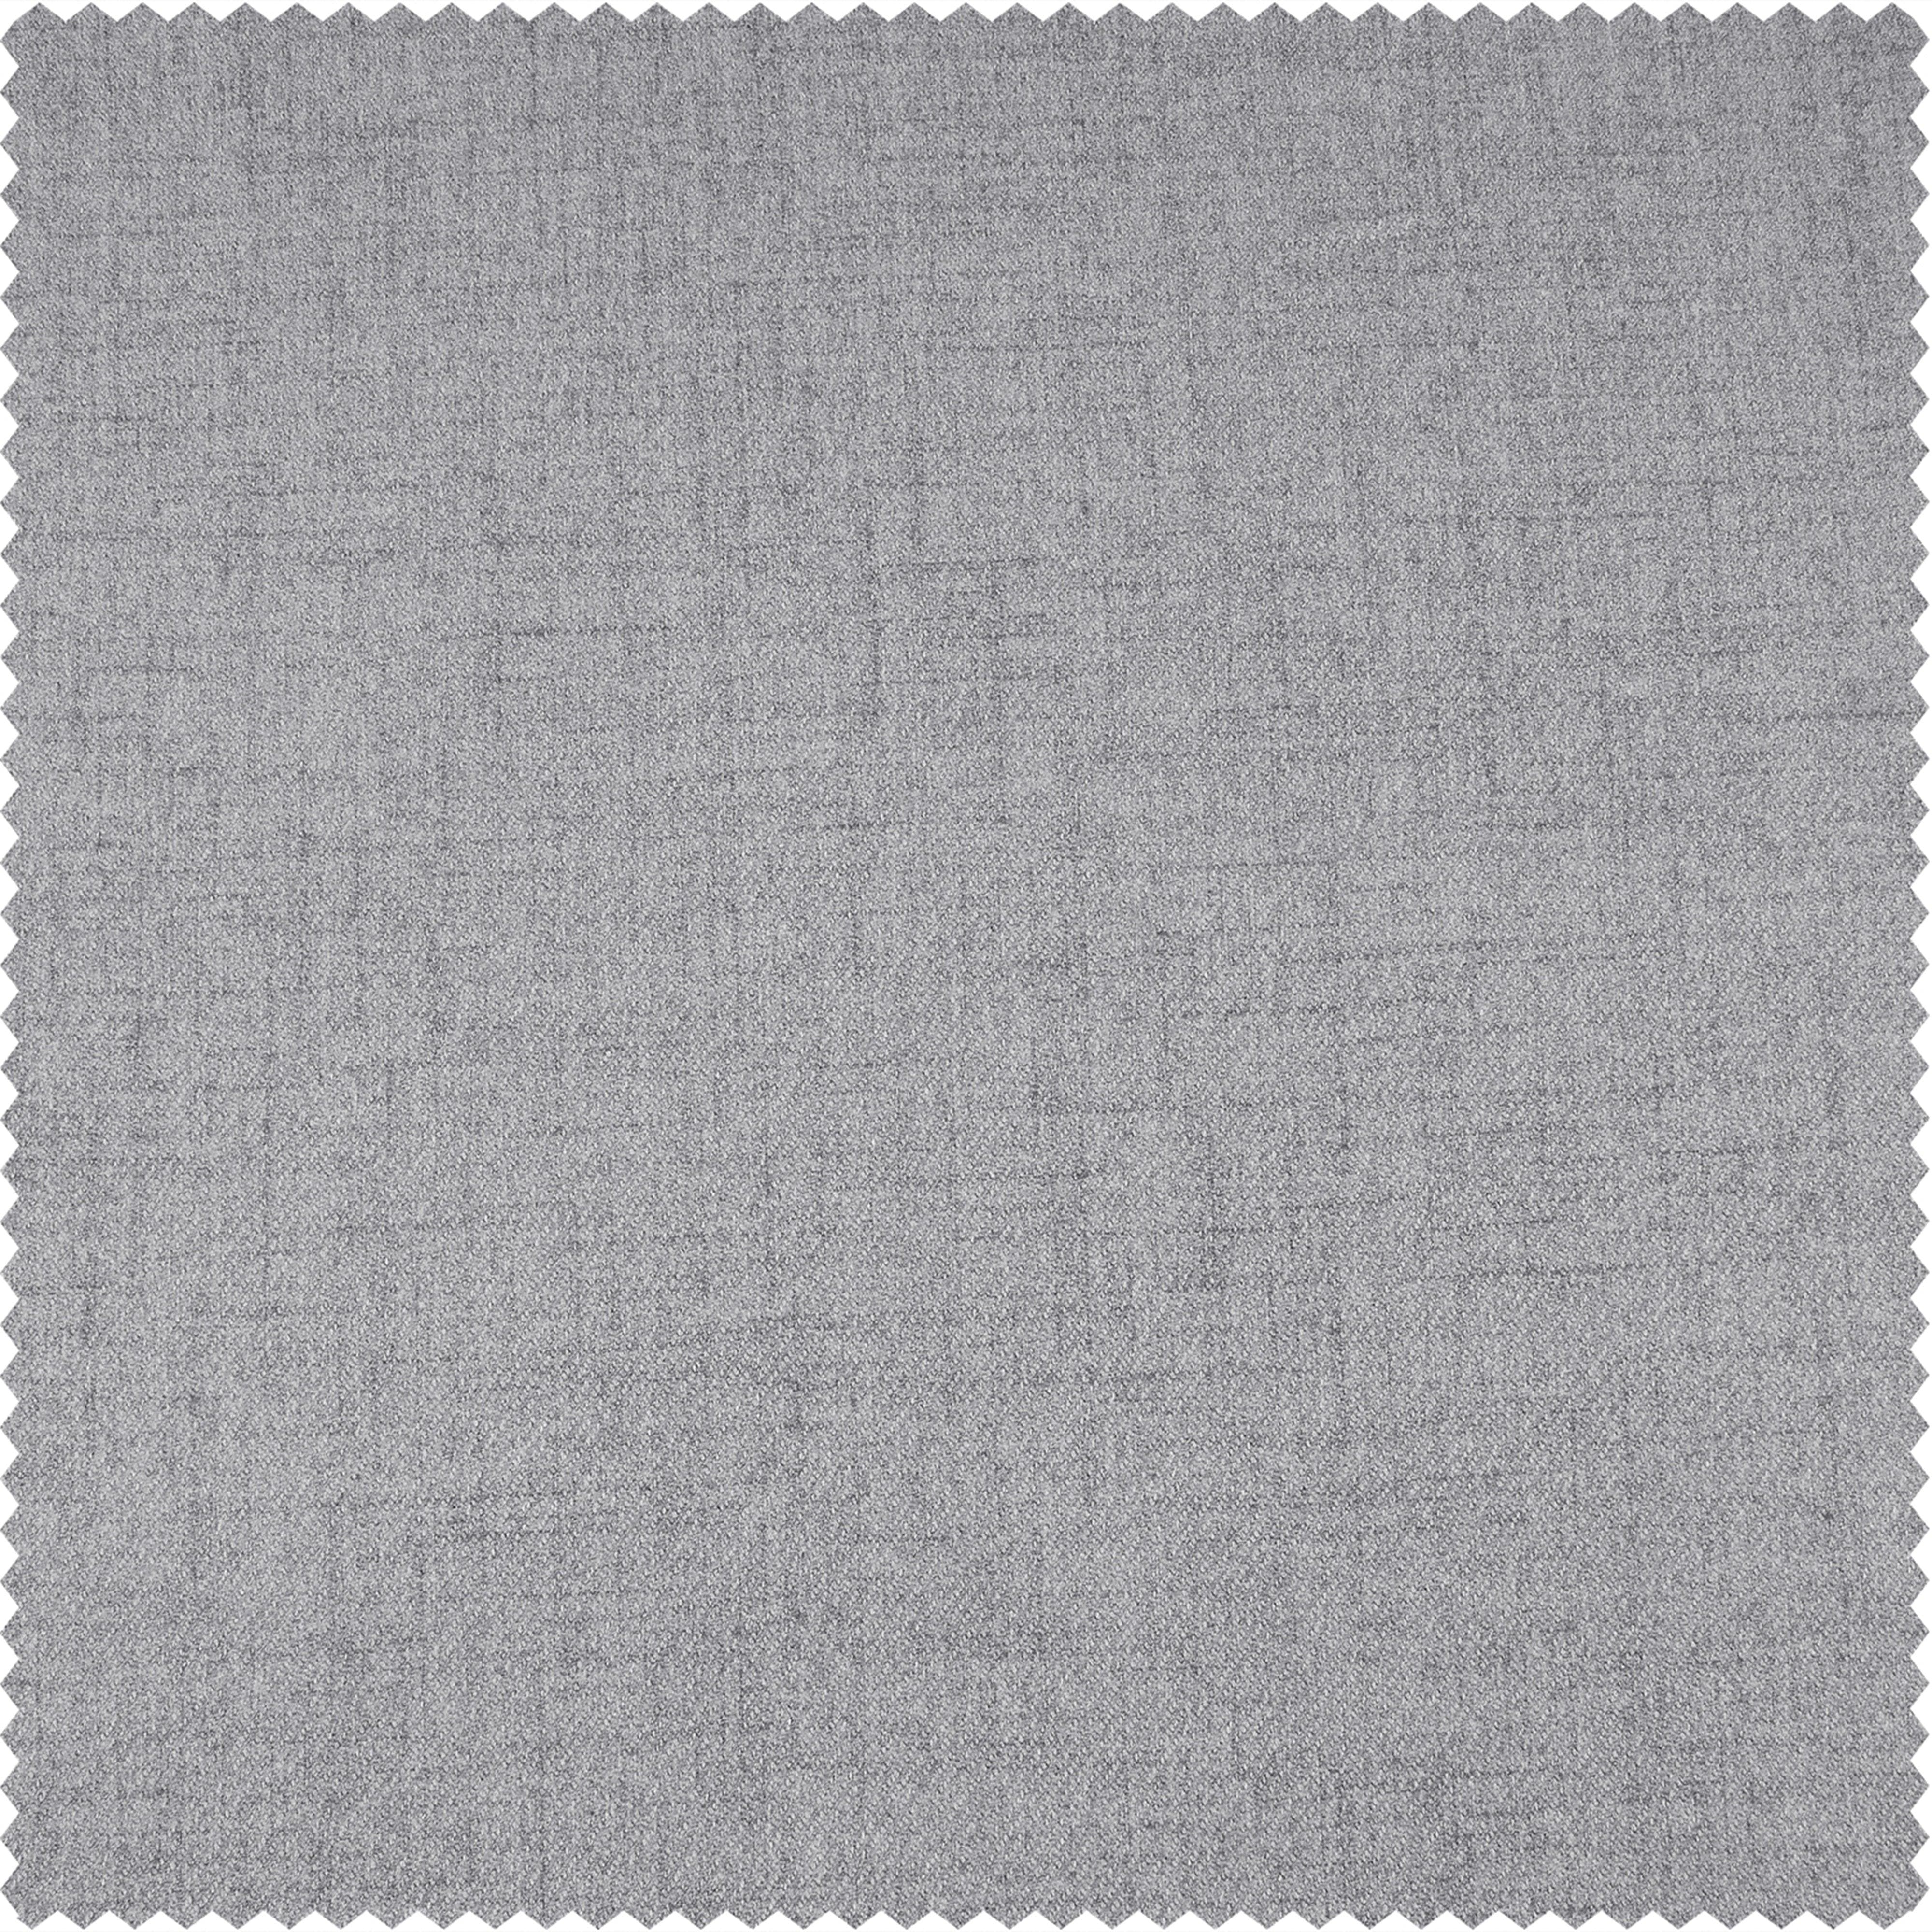 Steely Grey Heathered Woolen Weave Swatch